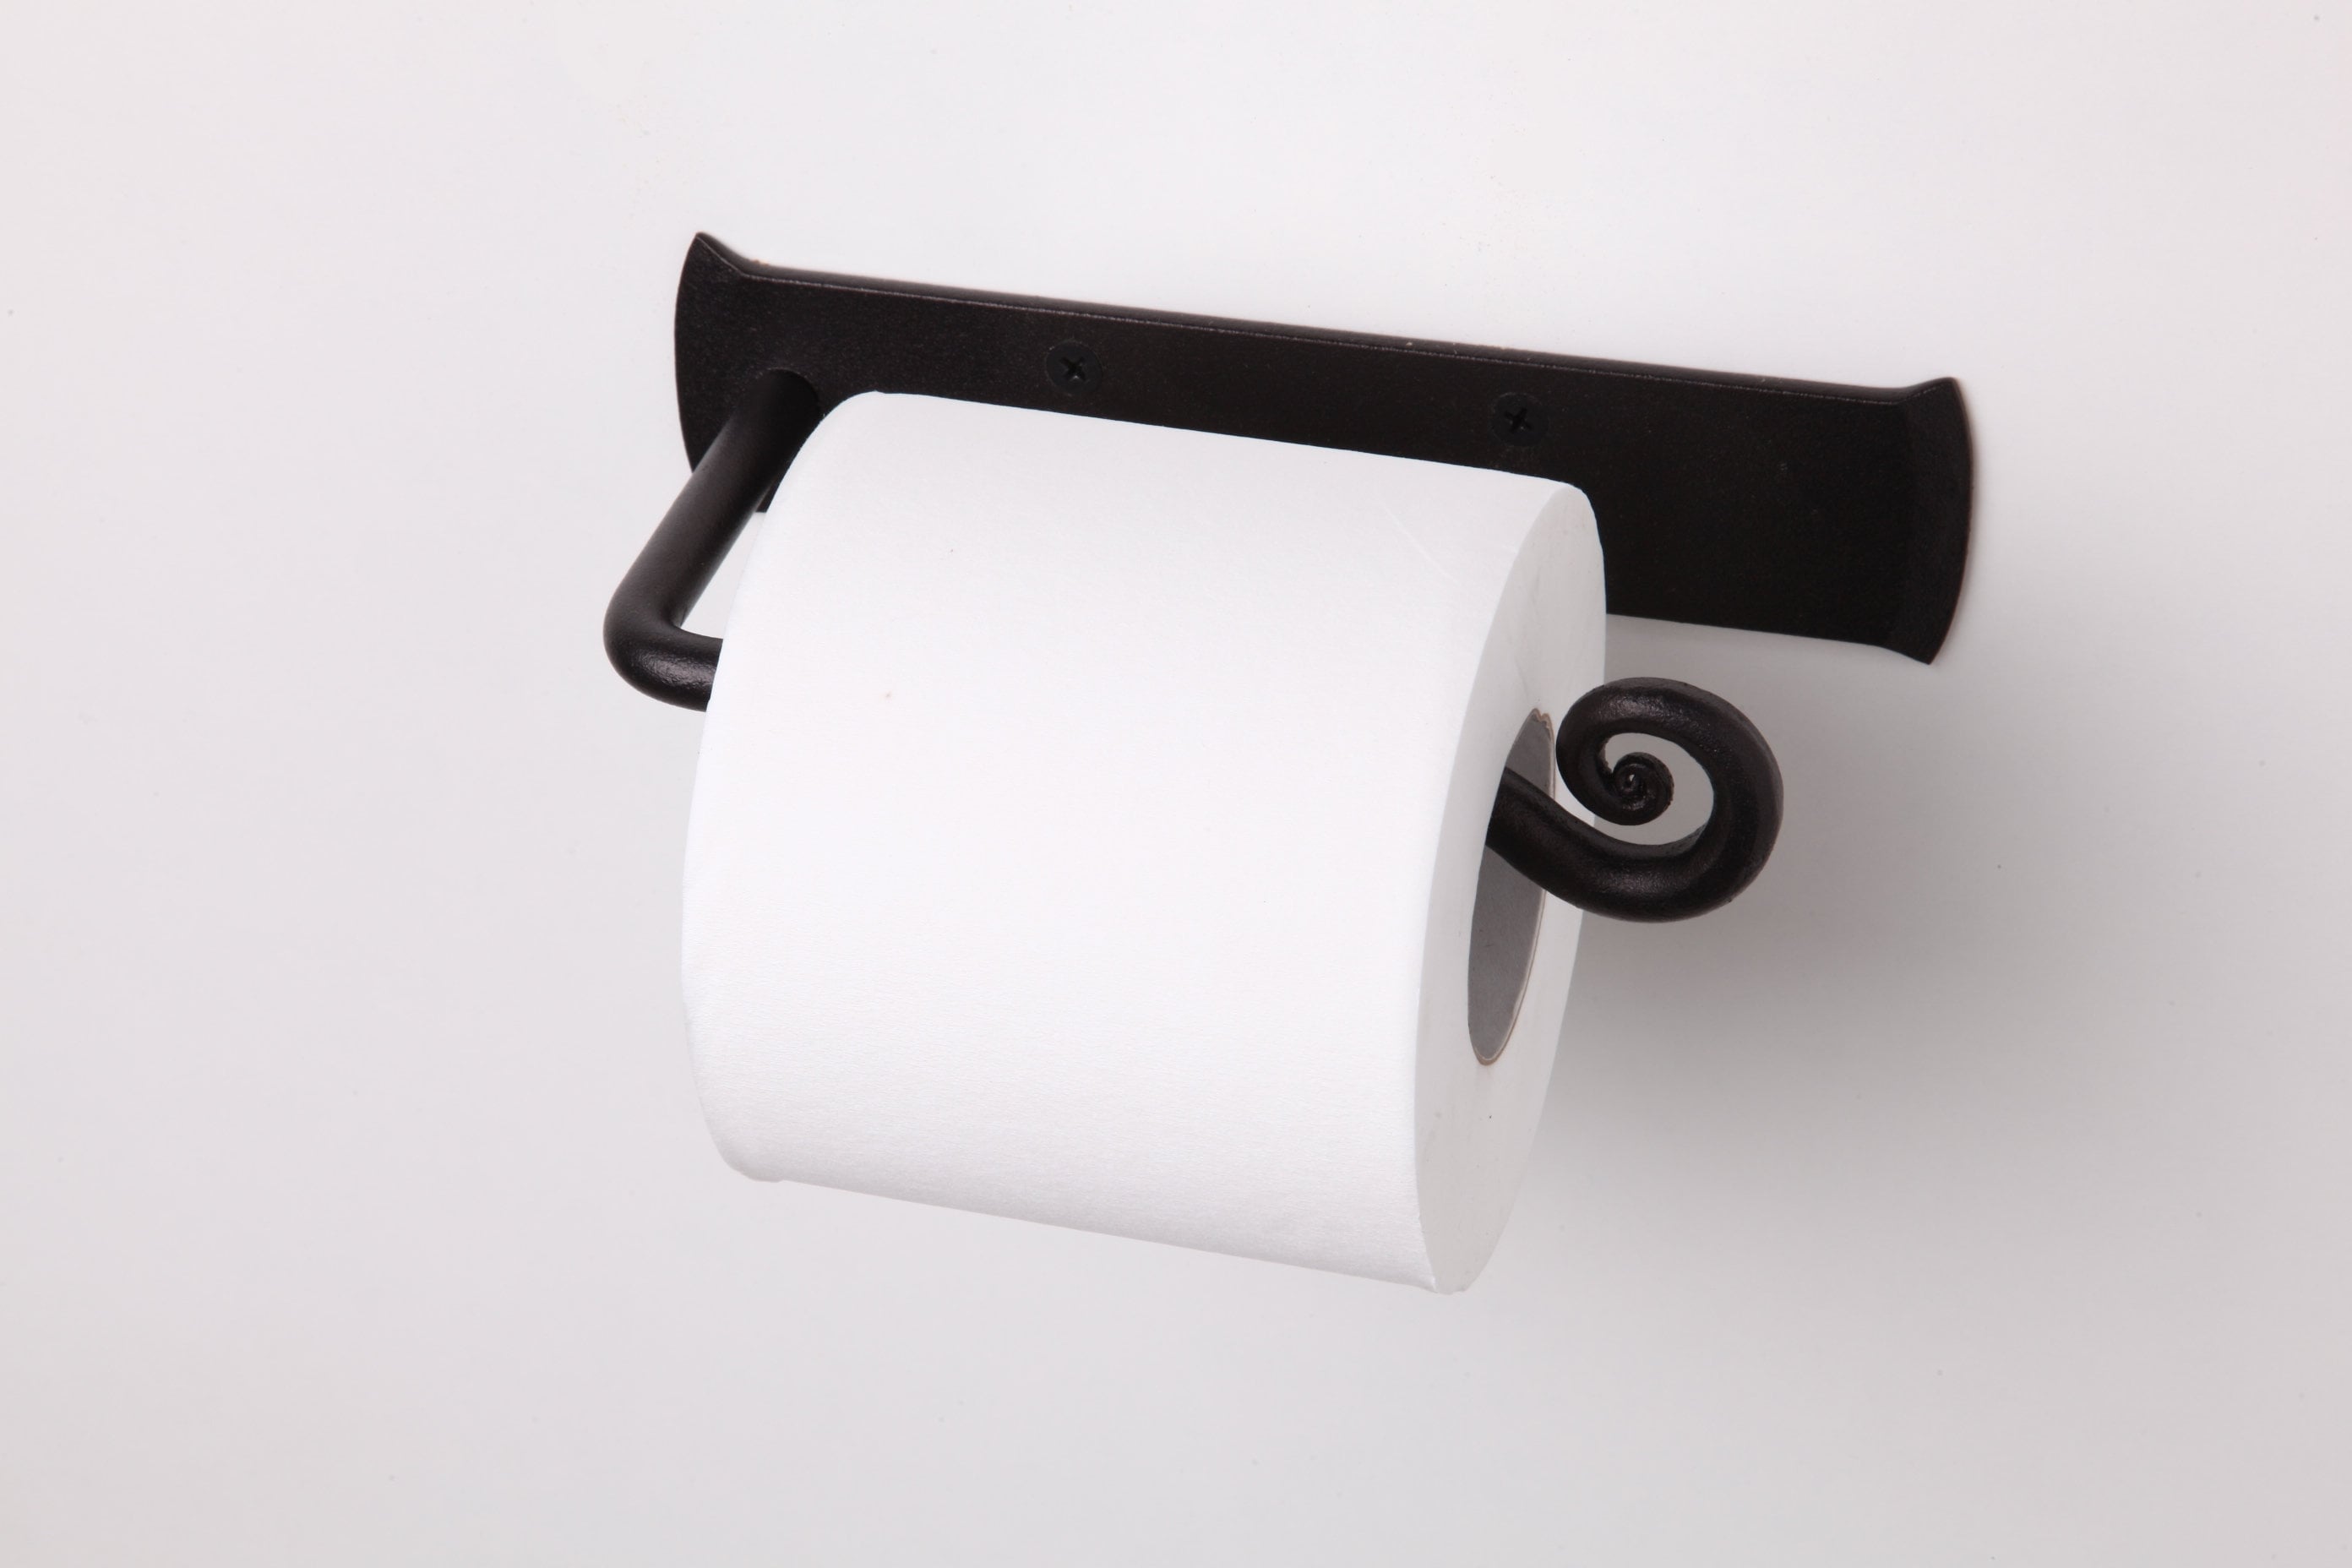 RTZEN Stylish Wall Paper Towel Holder, Black Decorative Wrought Iron  Hanger, Wall Mount Fancy Paper Dispenser